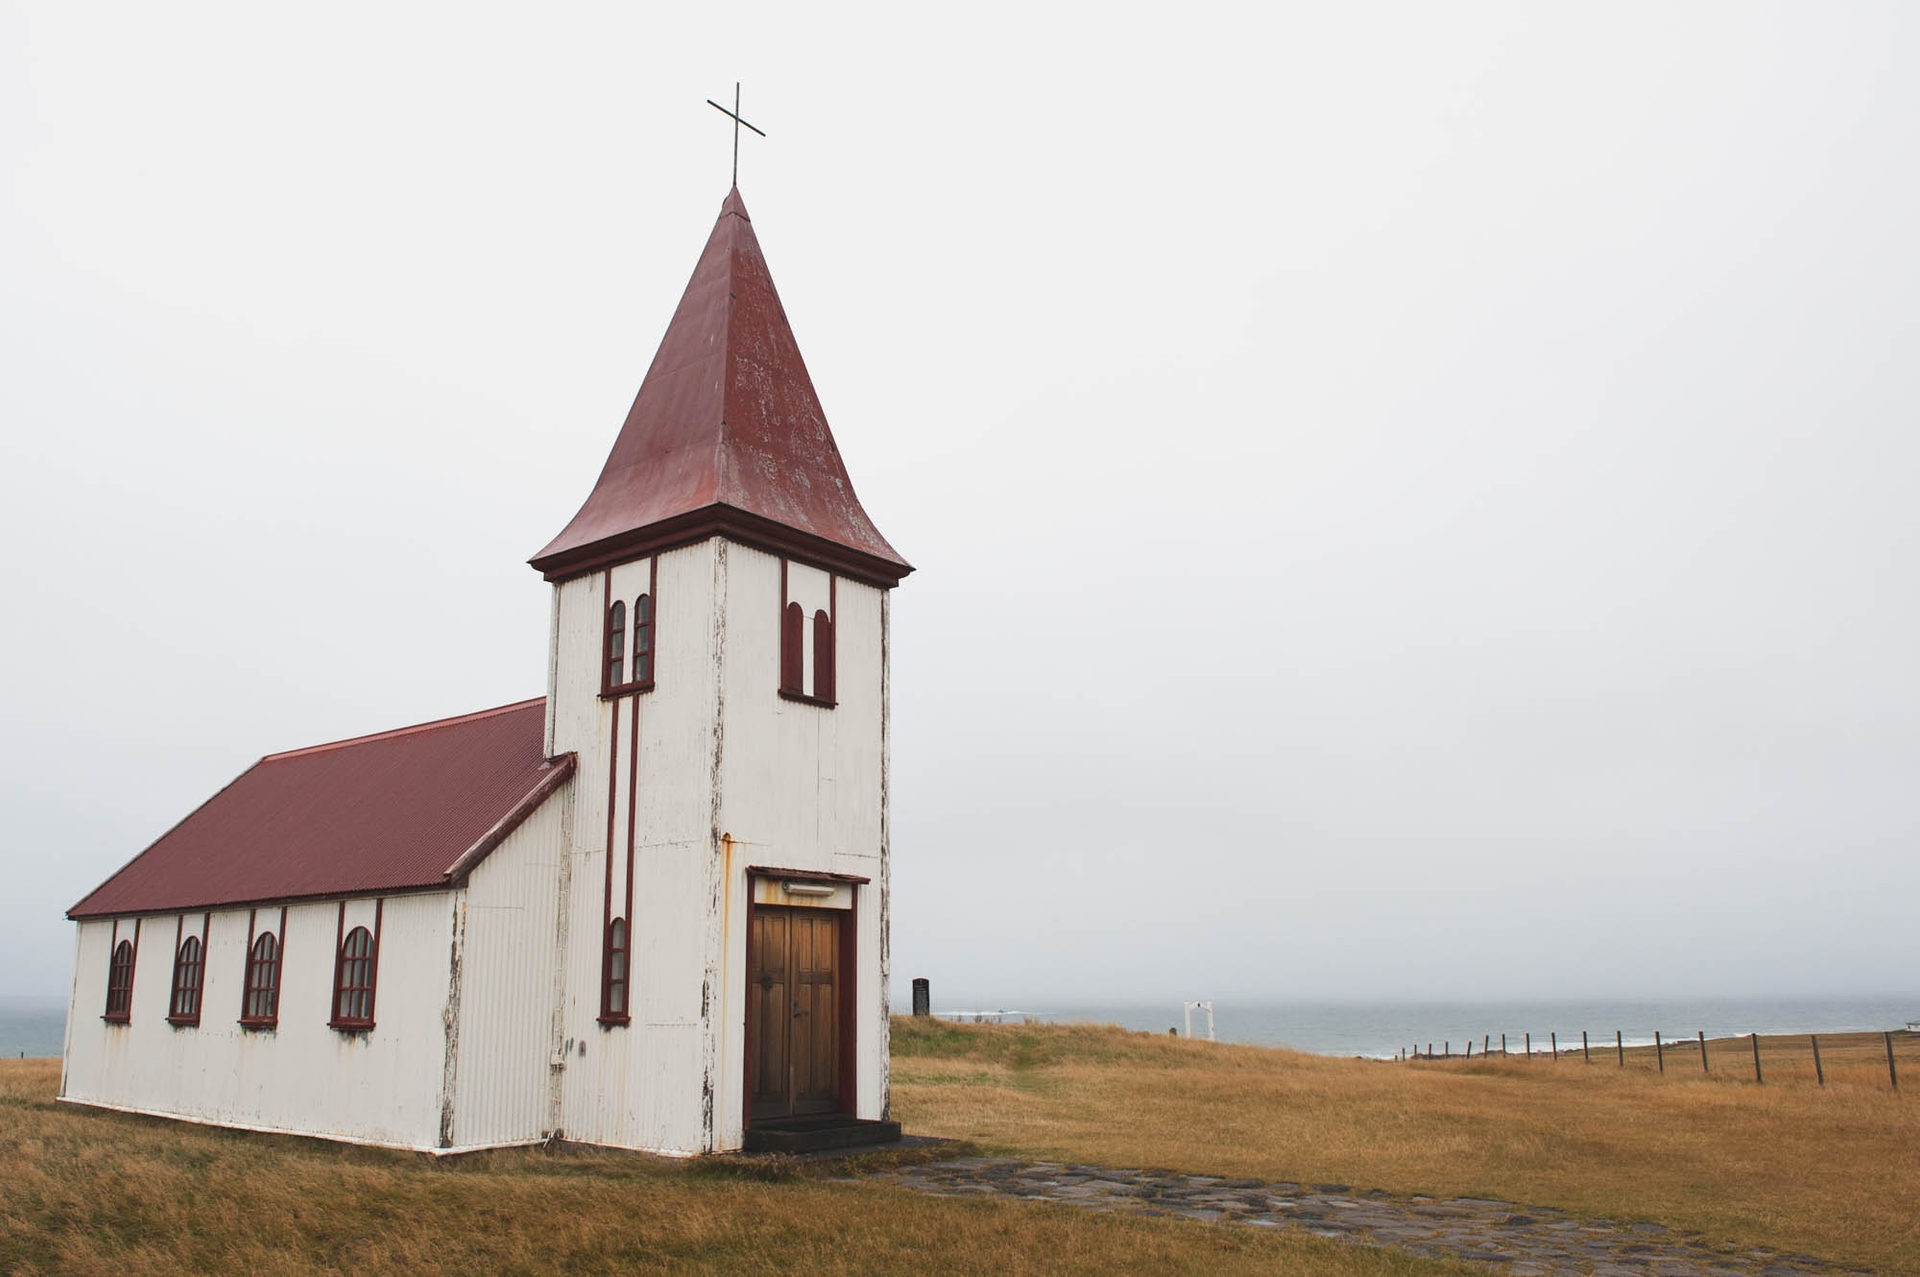 An Icelandic Church in the Snæfellsnes peninsula of western Iceland